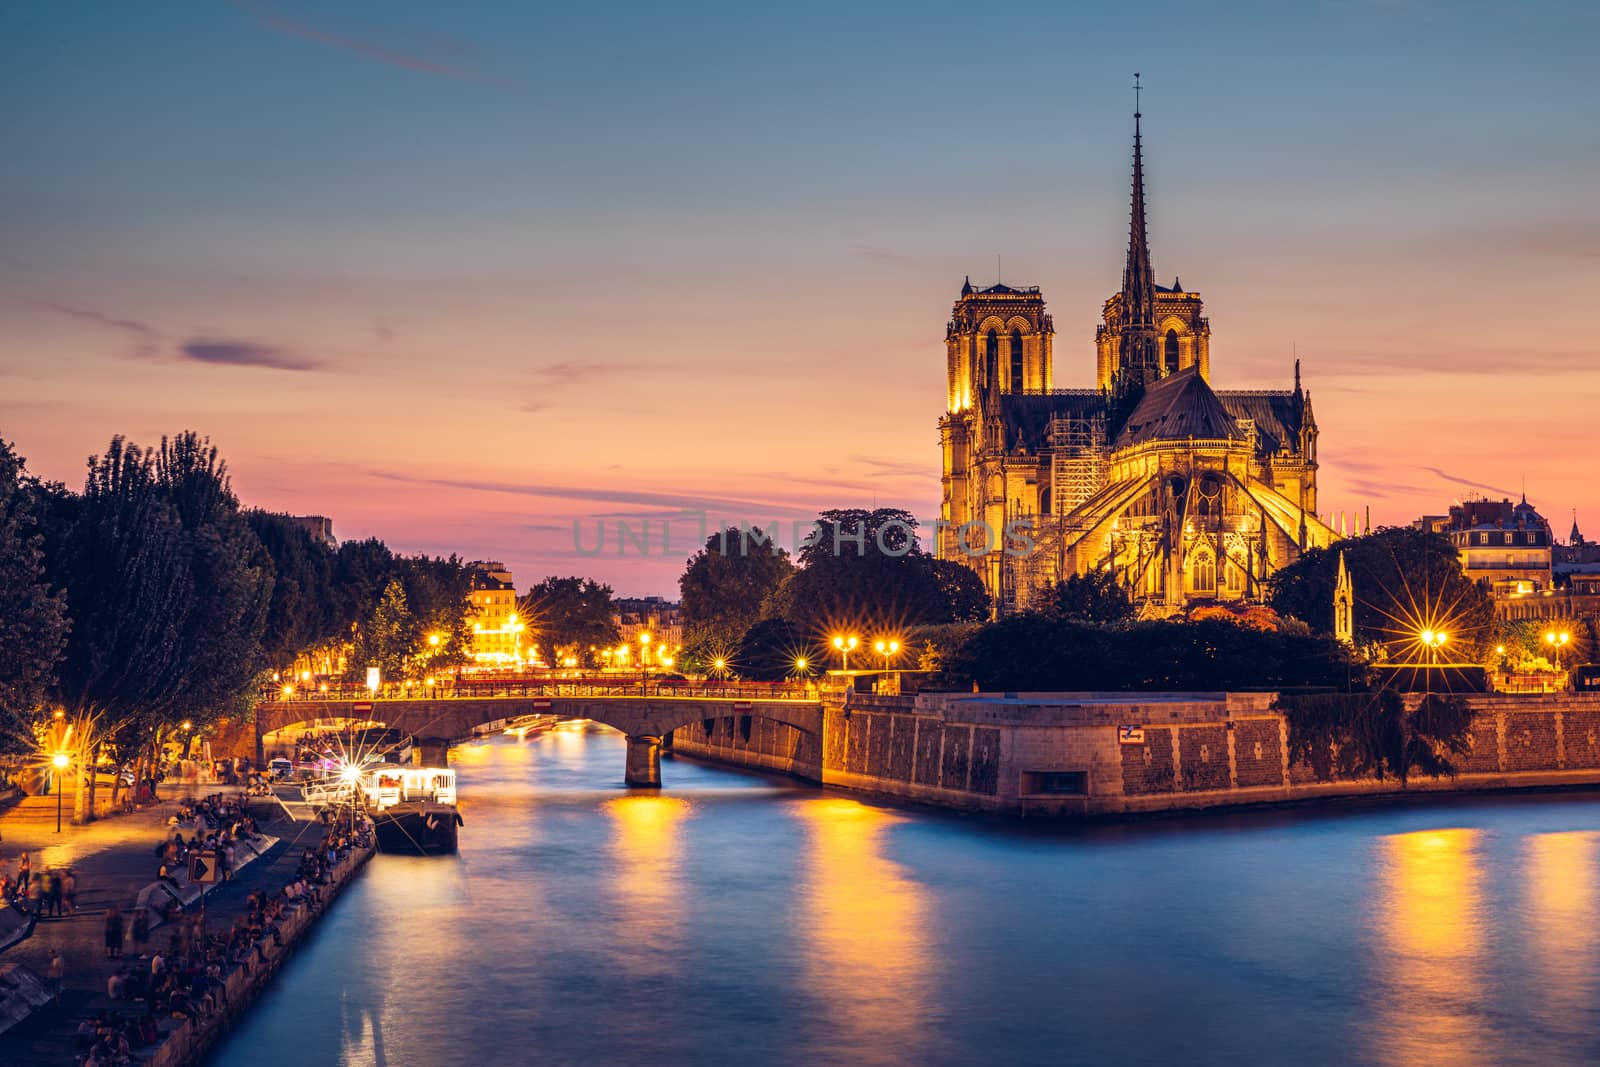 Notre Dame de Paris cathedral at sunset, France. Notre Dame de Paris, most beautiful Cathedral in Paris. Picturesque sunset over Cathedral of Notre Dame de Paris, destroyed in a fire in 2019, Paris.